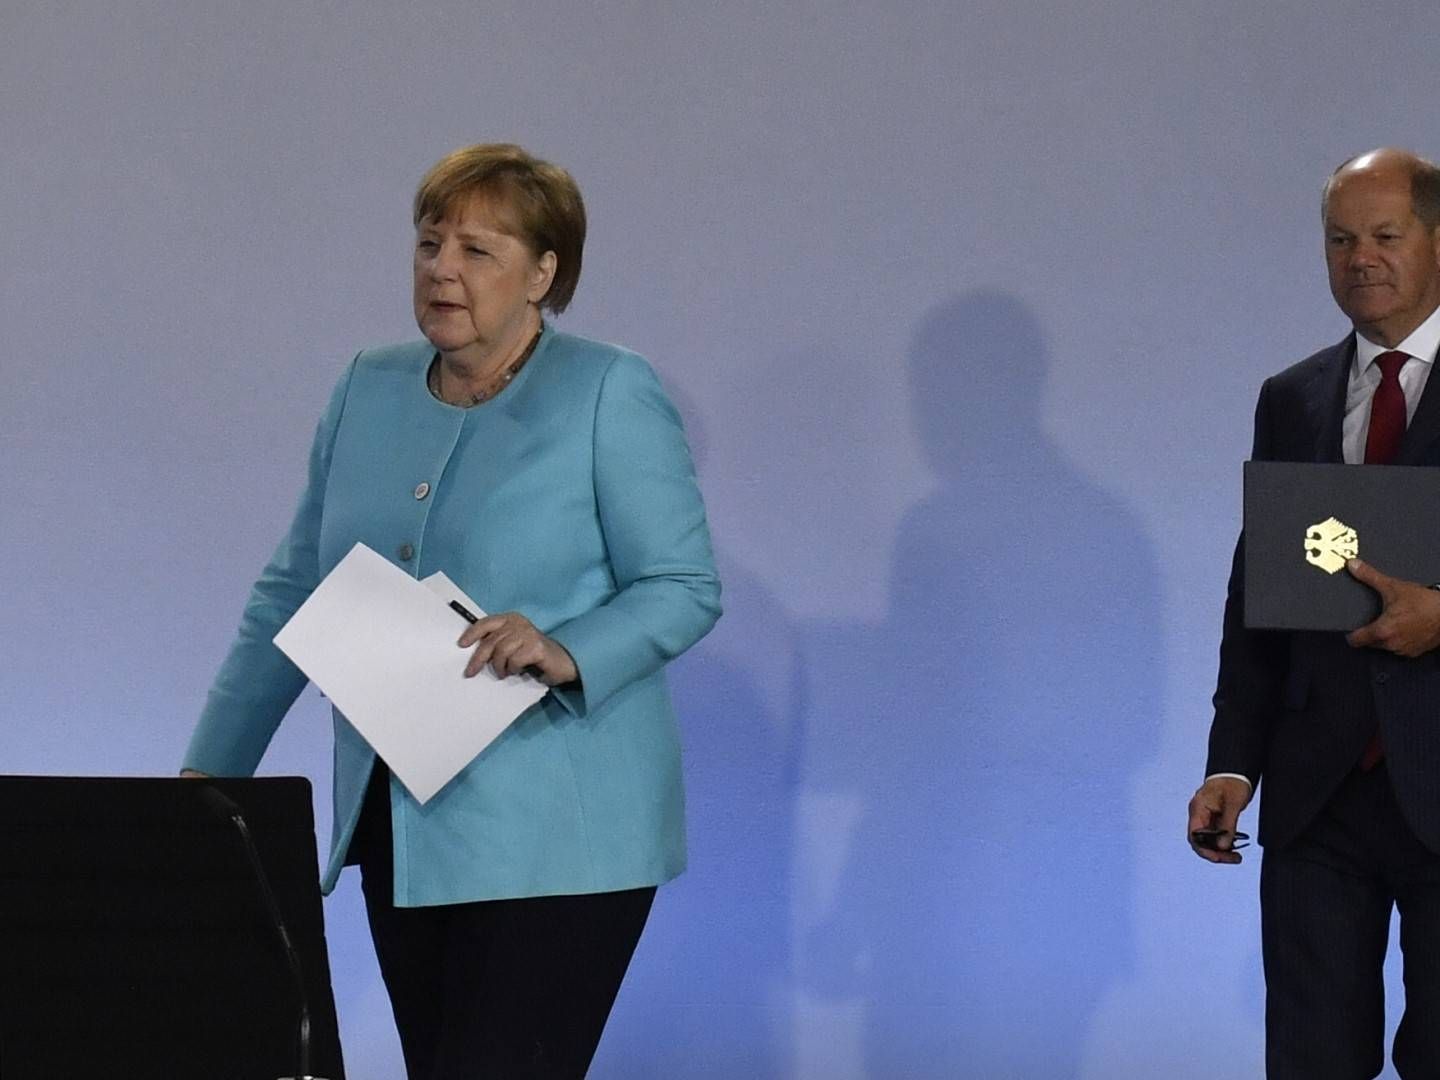 Angela Merkel und Olaf Scholz | Foto: picture alliance / AP Images